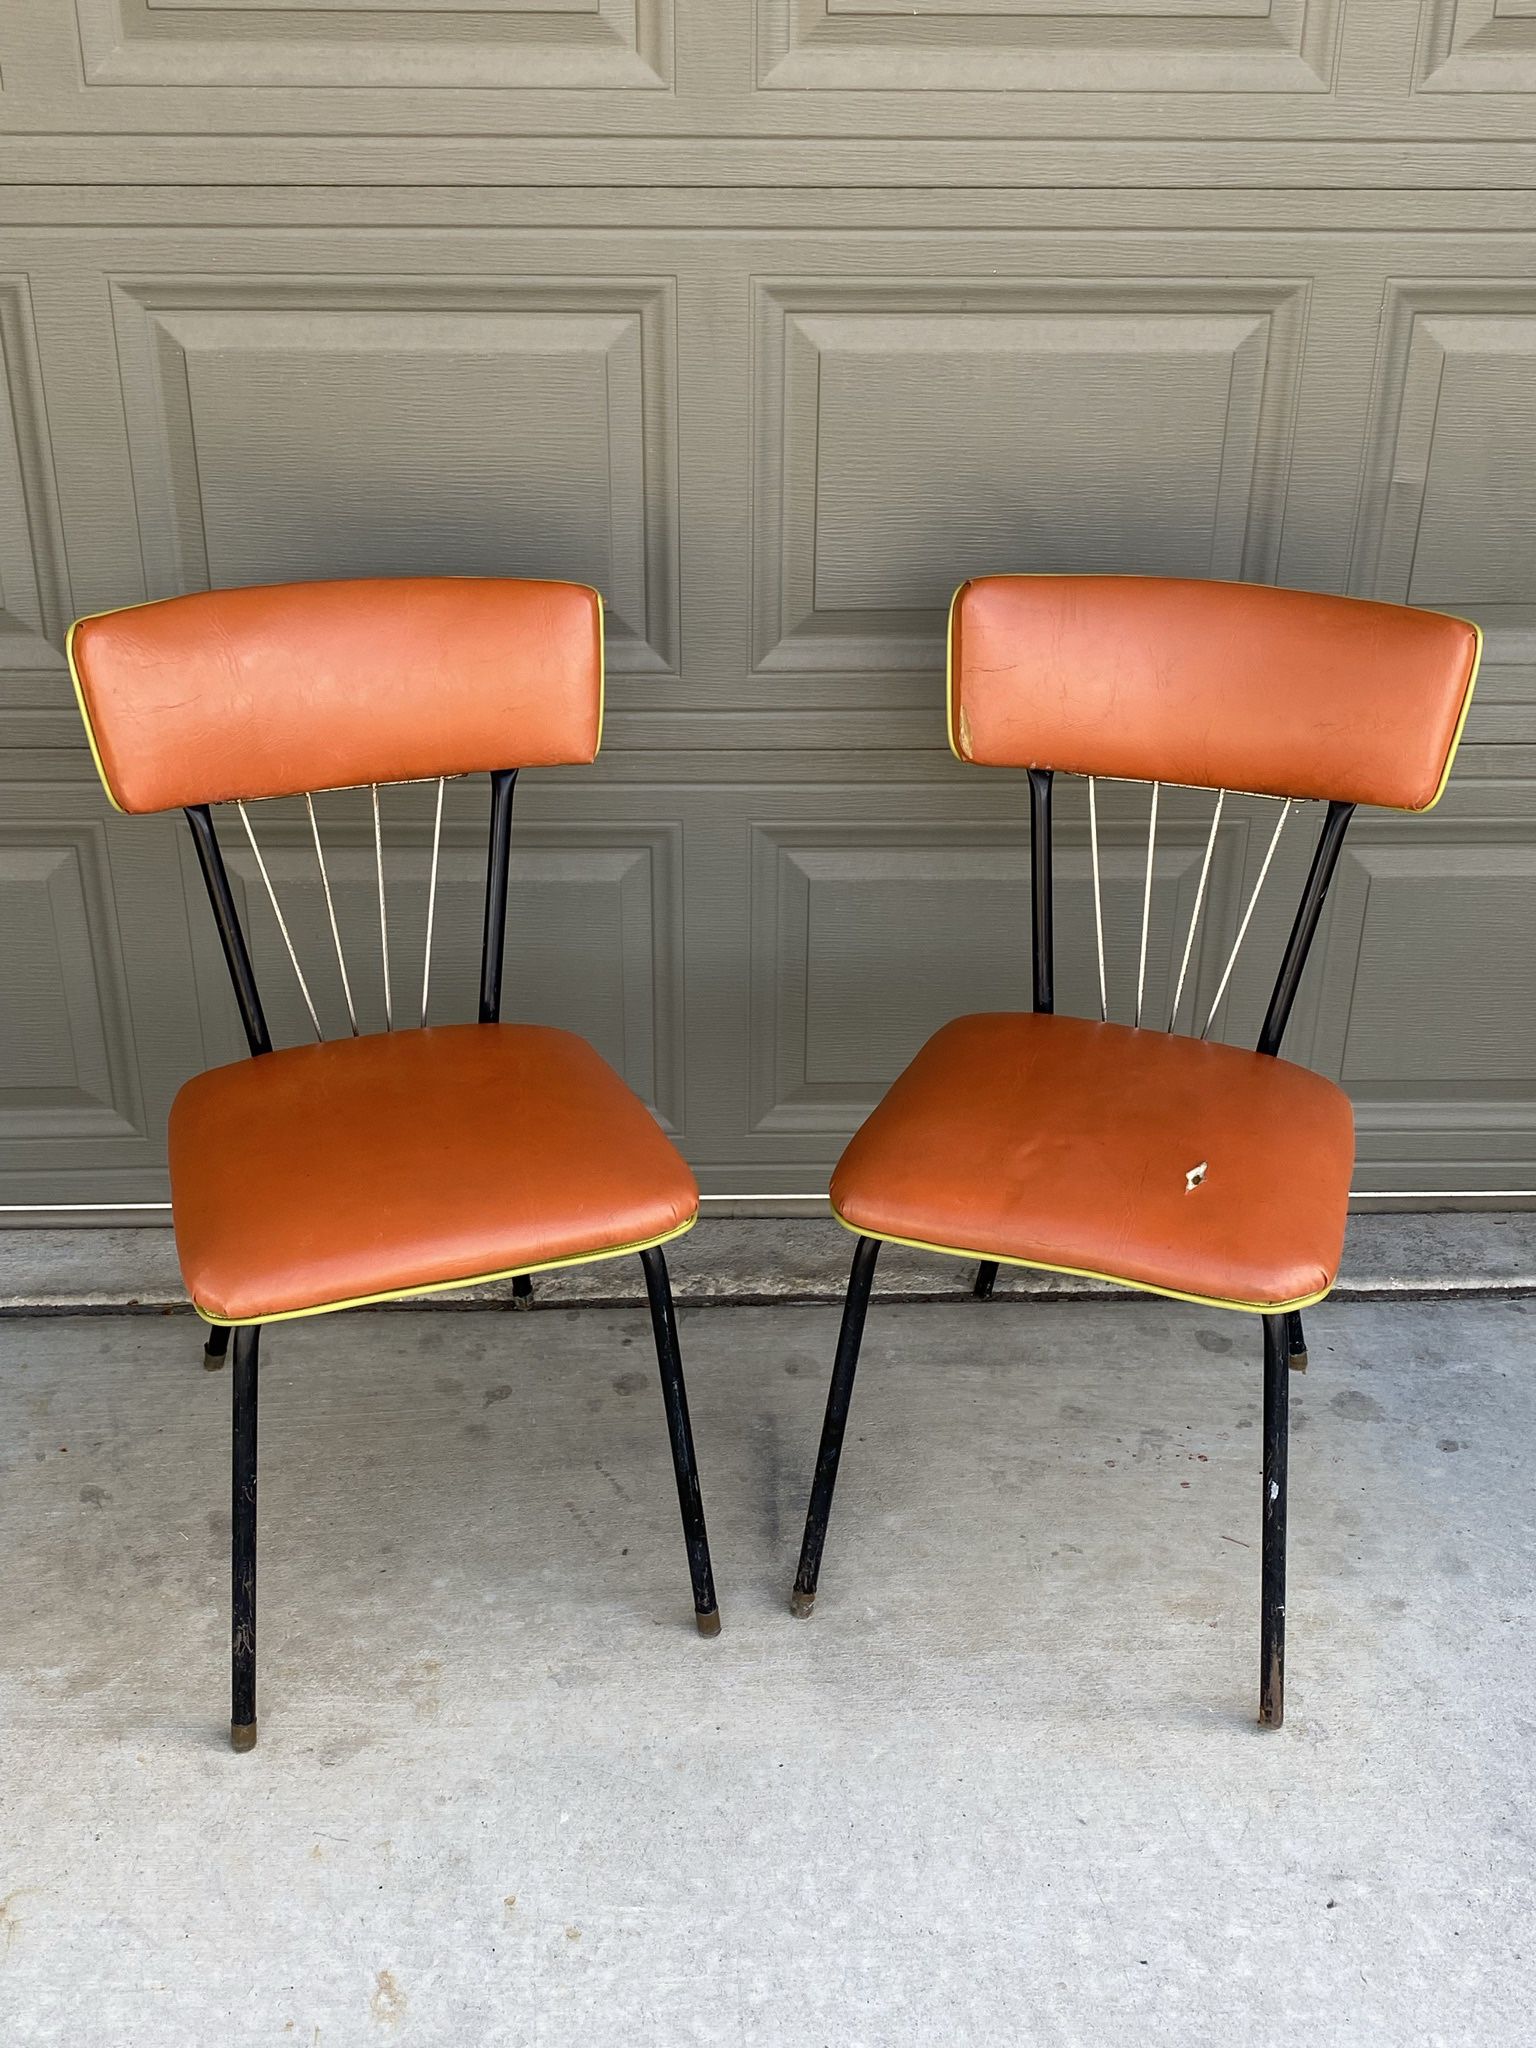 Cool Atomic Retro Vintage Chairs